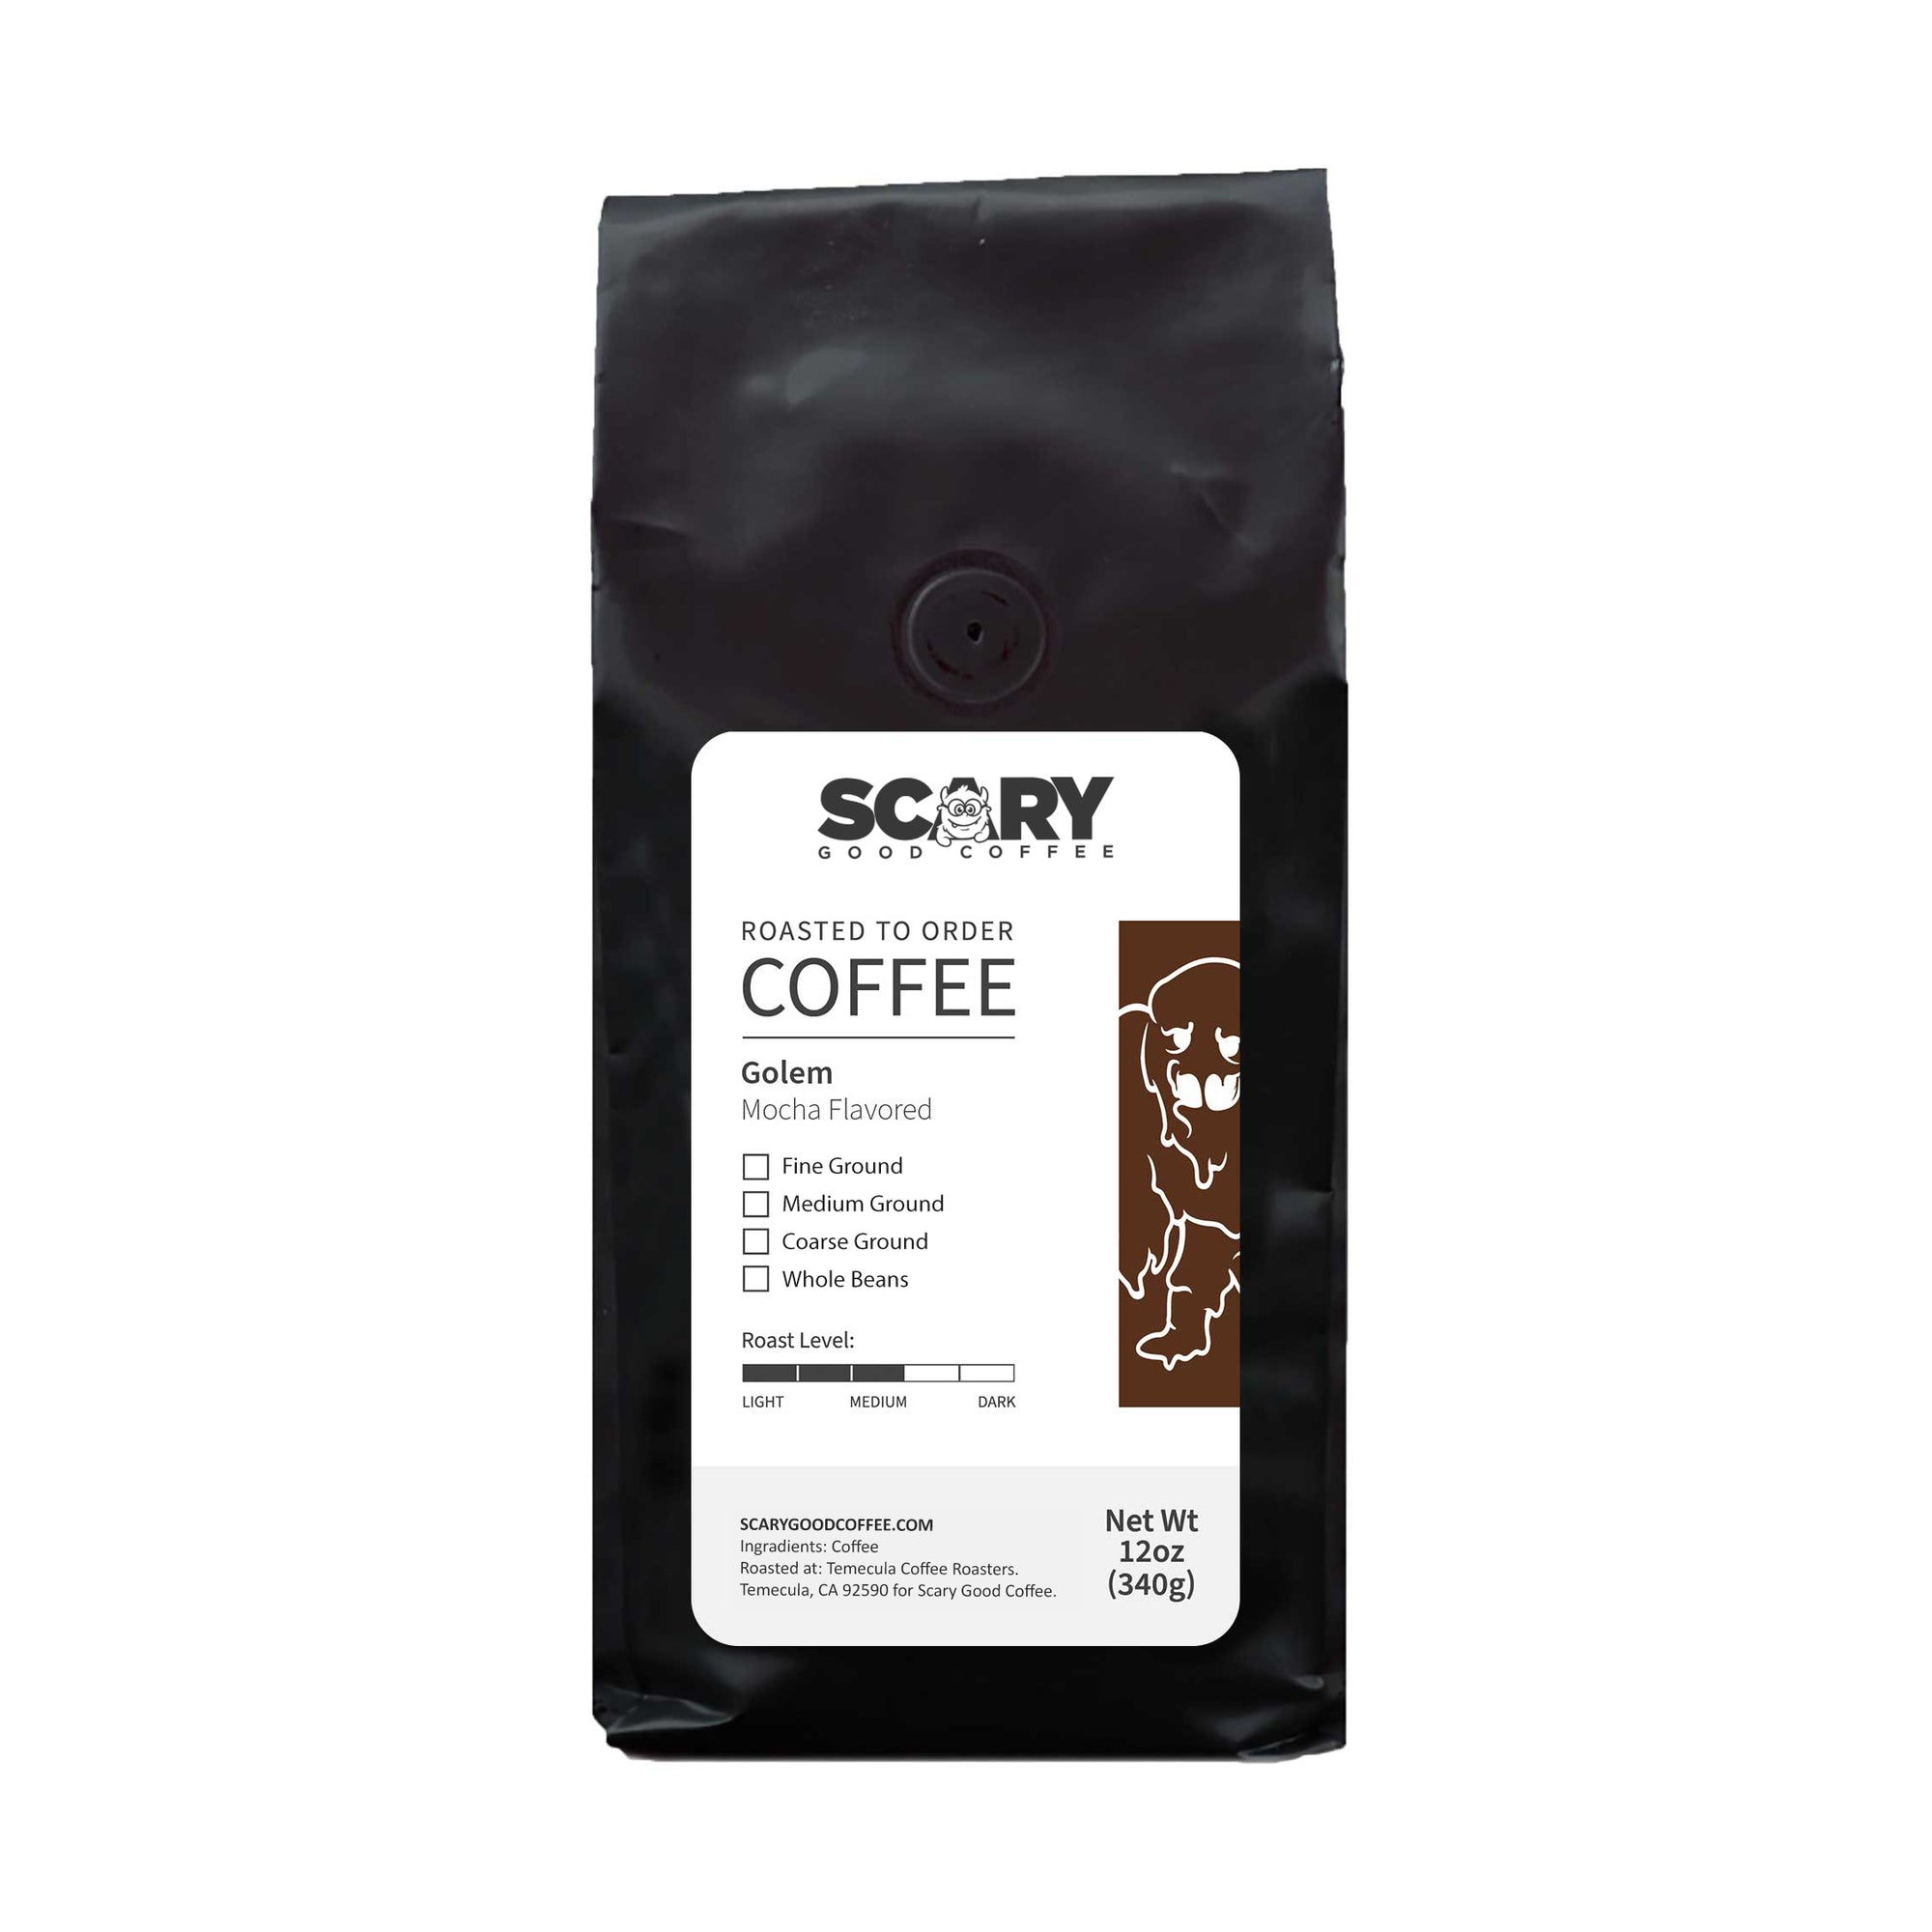 Golem - Mocha Flavored Coffee